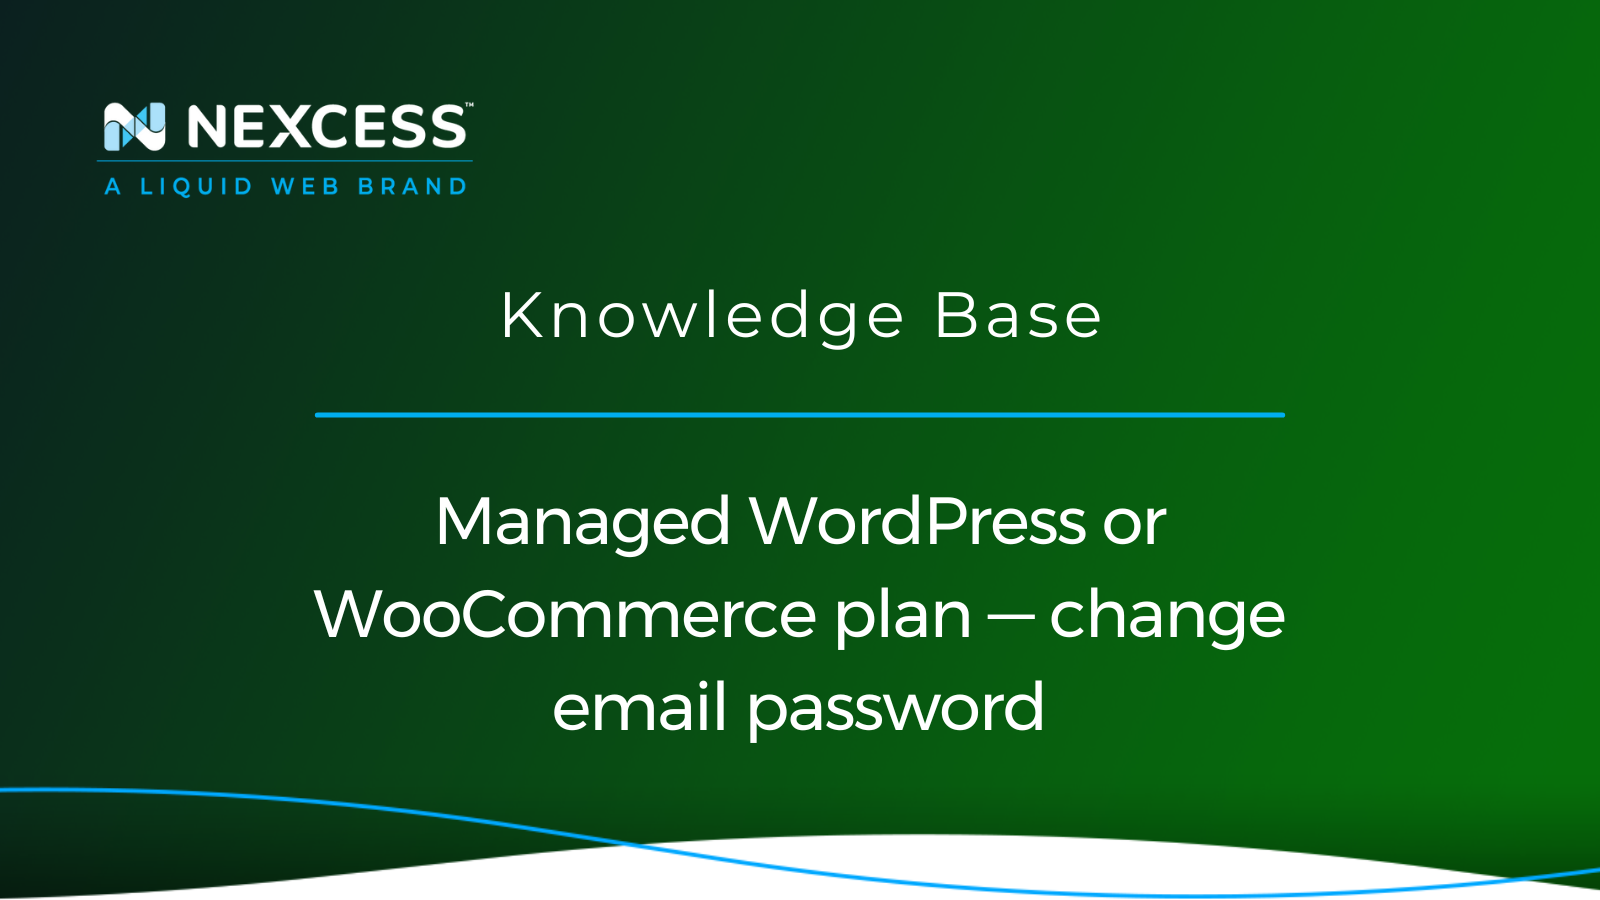 Managed WordPress or WooCommerce plan — change email password